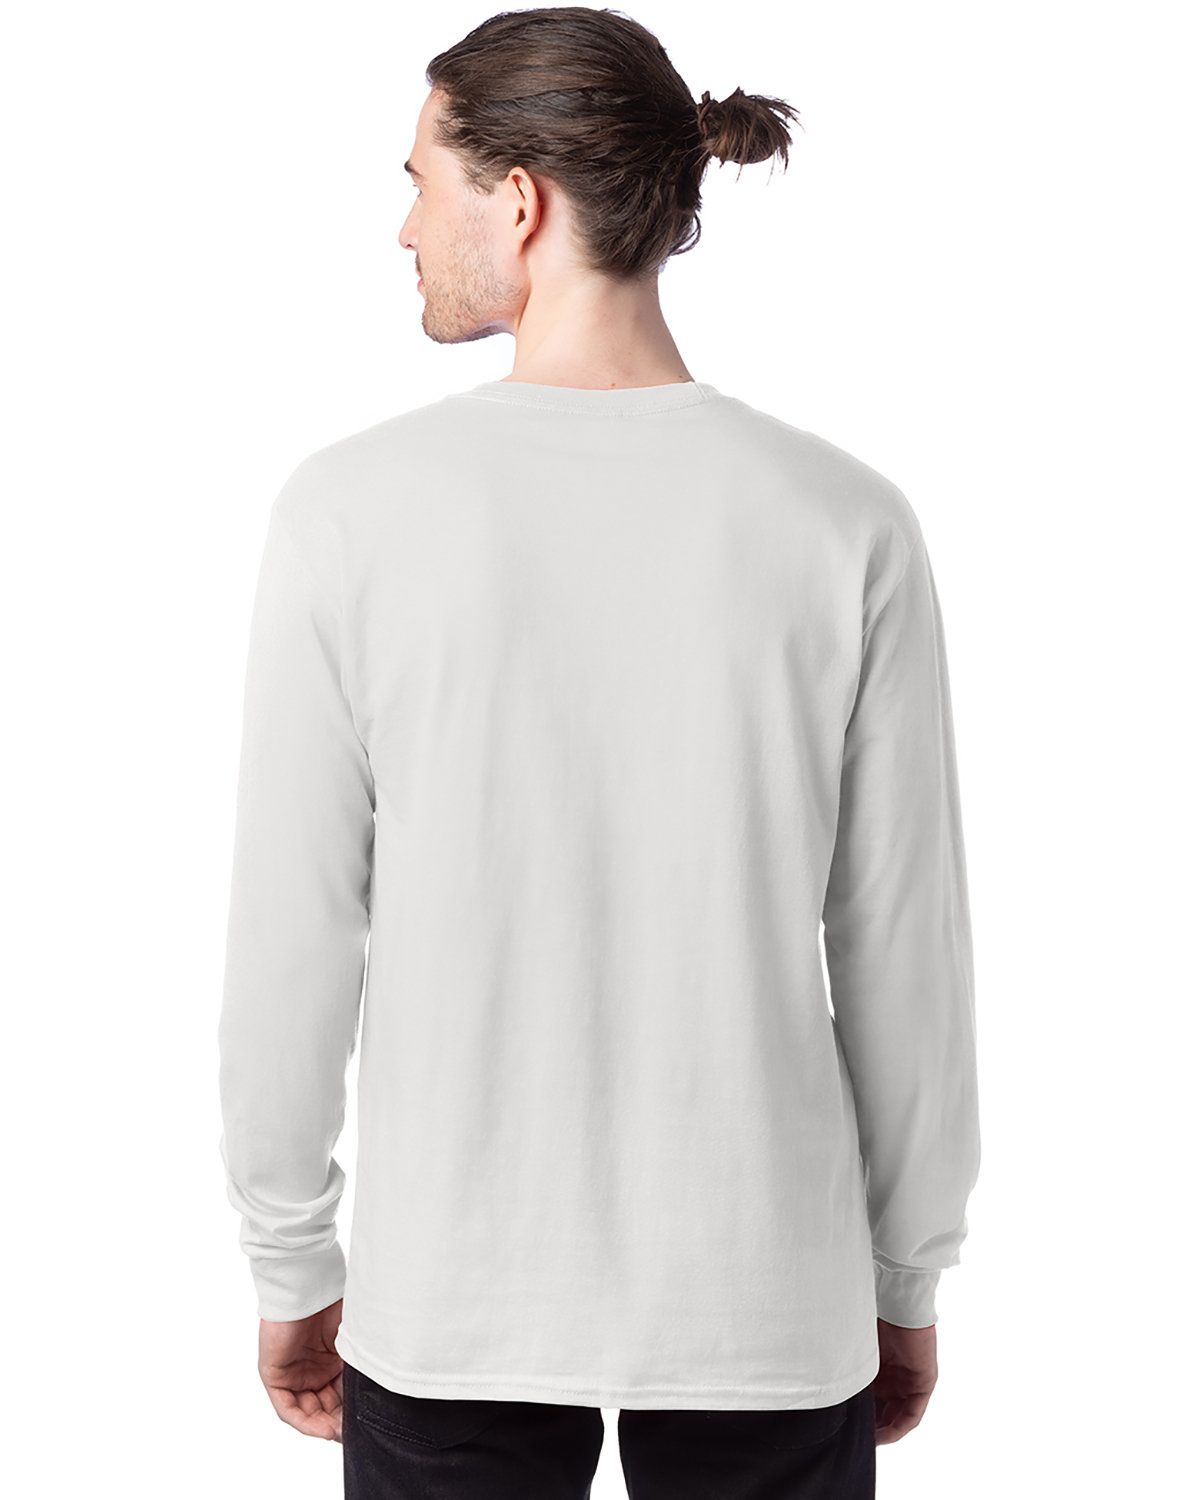 'Hanes 5286 Men's ComfortSof Cotton Long Sleeve T Shirt'